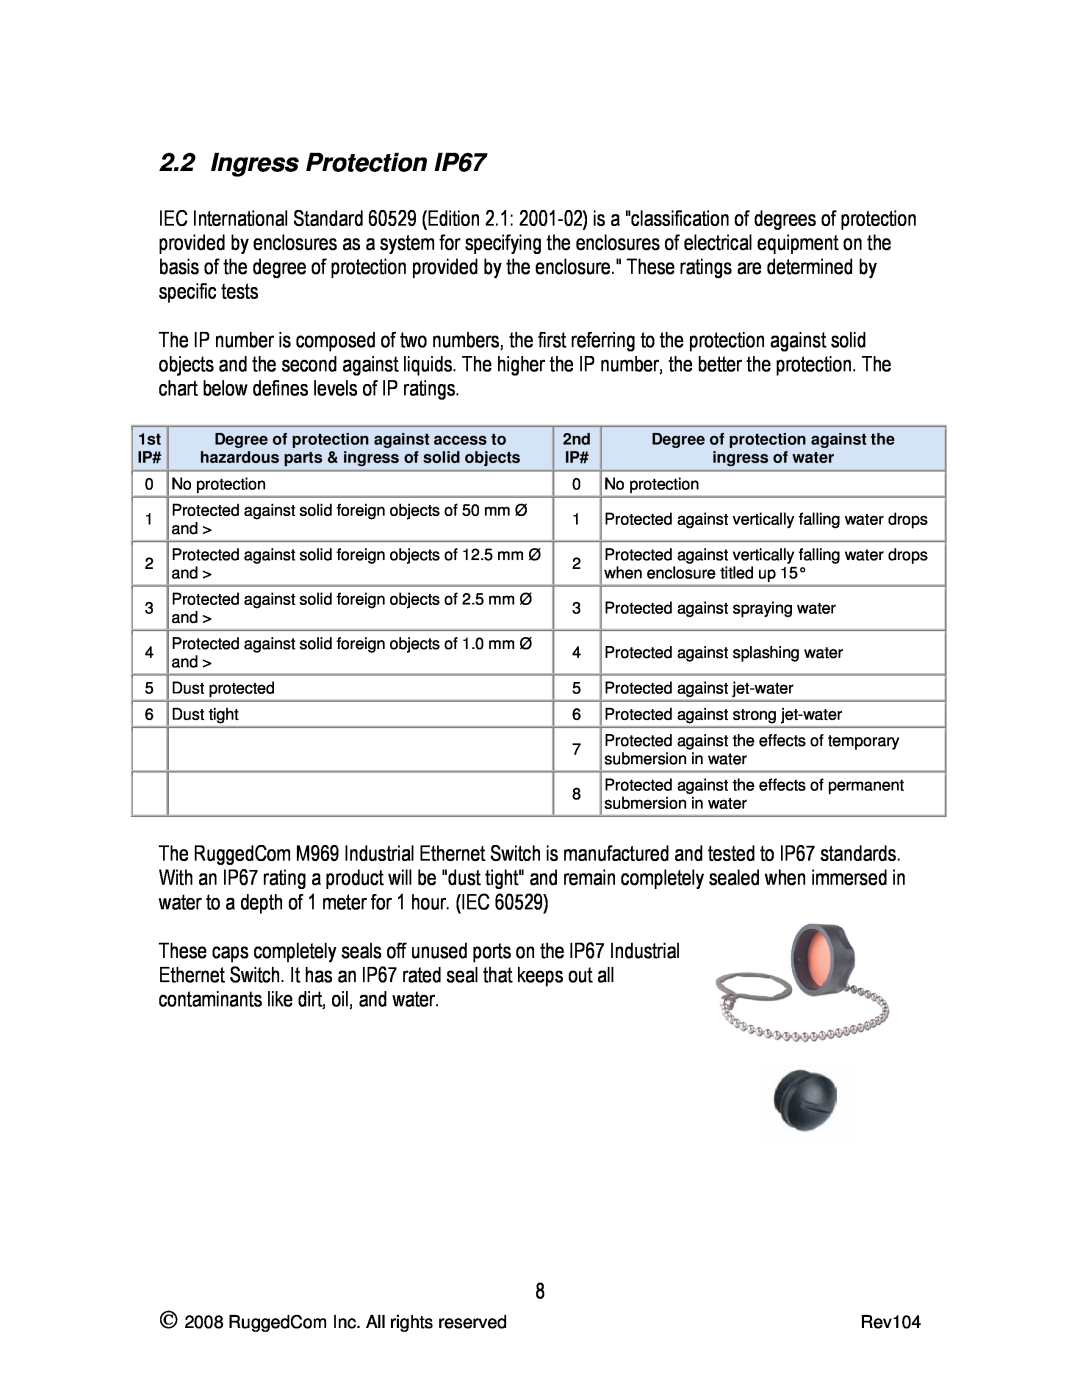 RuggedCom RS969 manual Ingress Protection IP67 